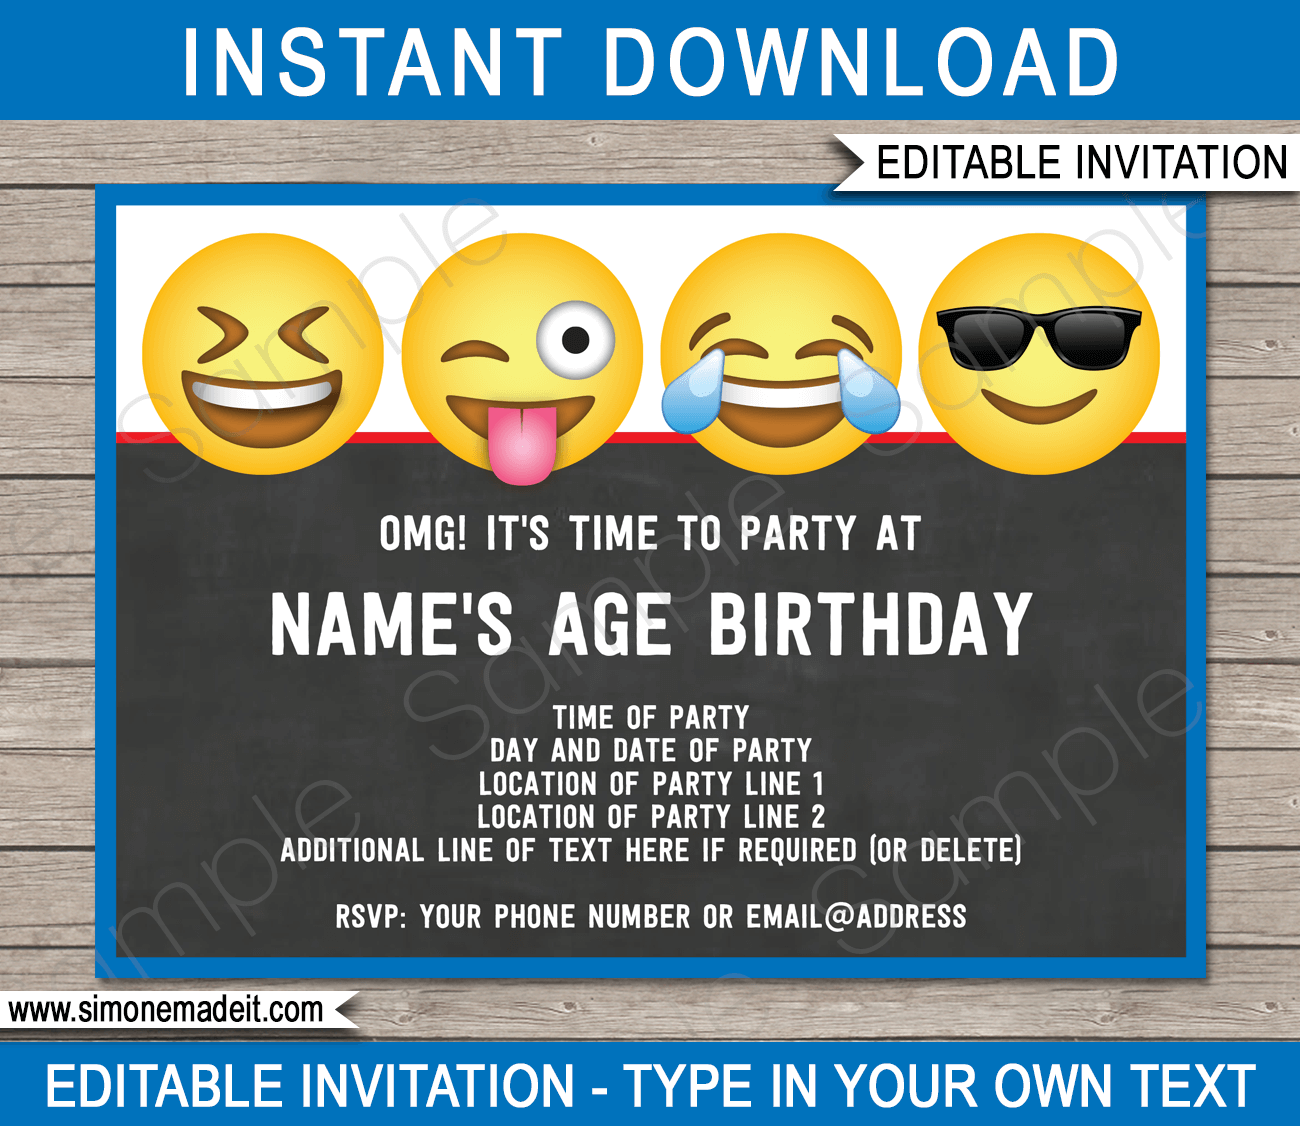 Emoji Theme Party Invitations Template for boys | Emoji Birthday Party | DIY Editable & Printable Invite | INSTANT DOWNLOAD via simonemadeit.com